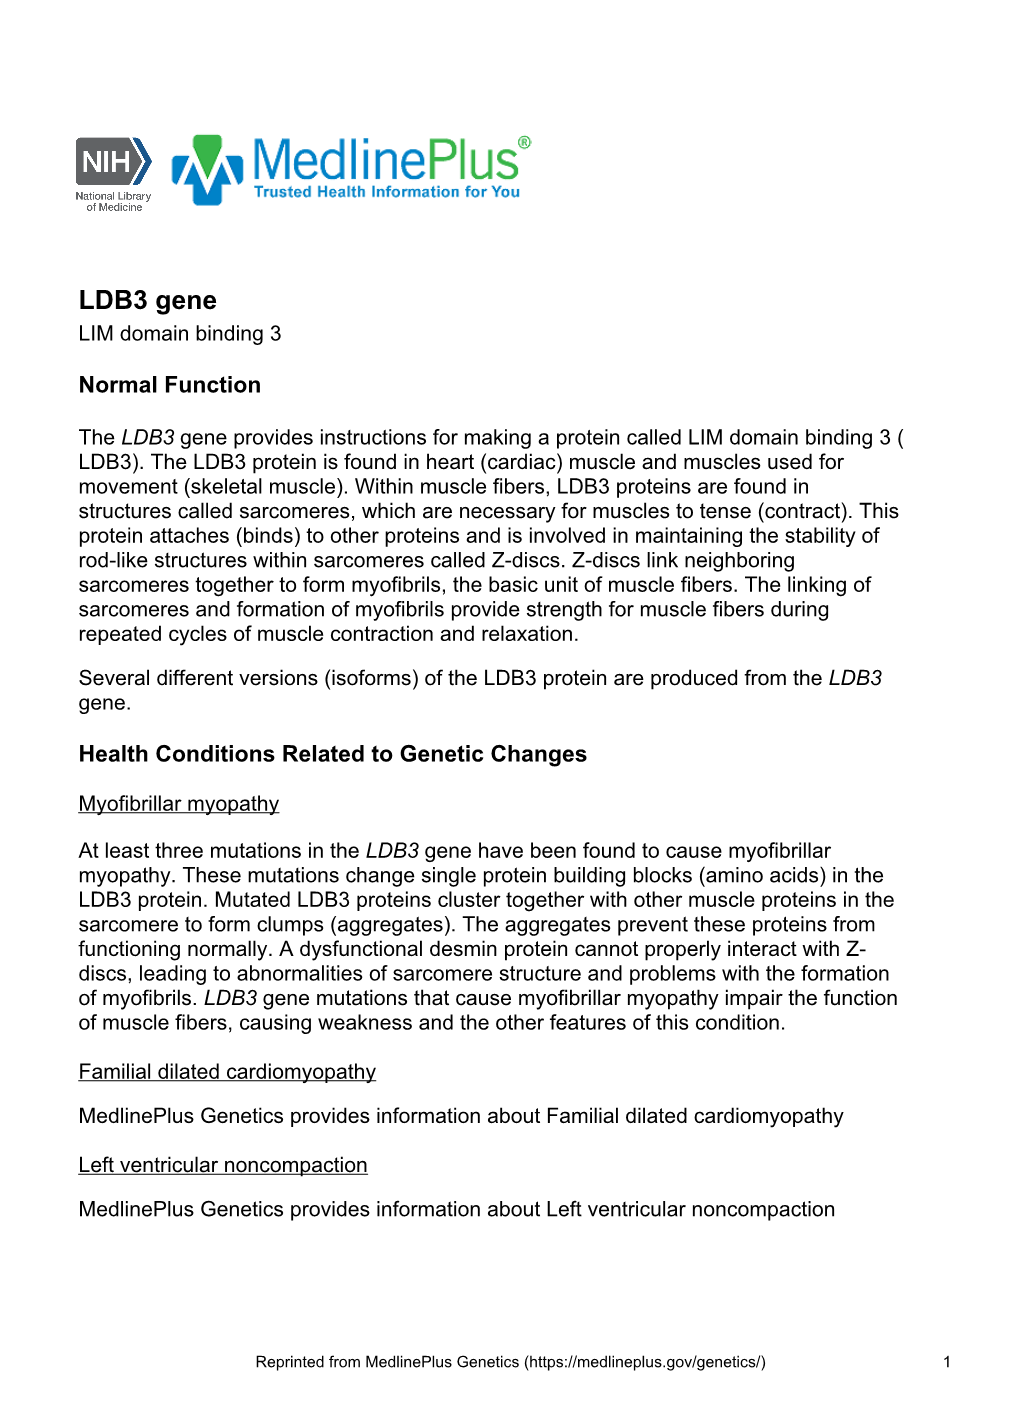 LDB3 Gene LIM Domain Binding 3